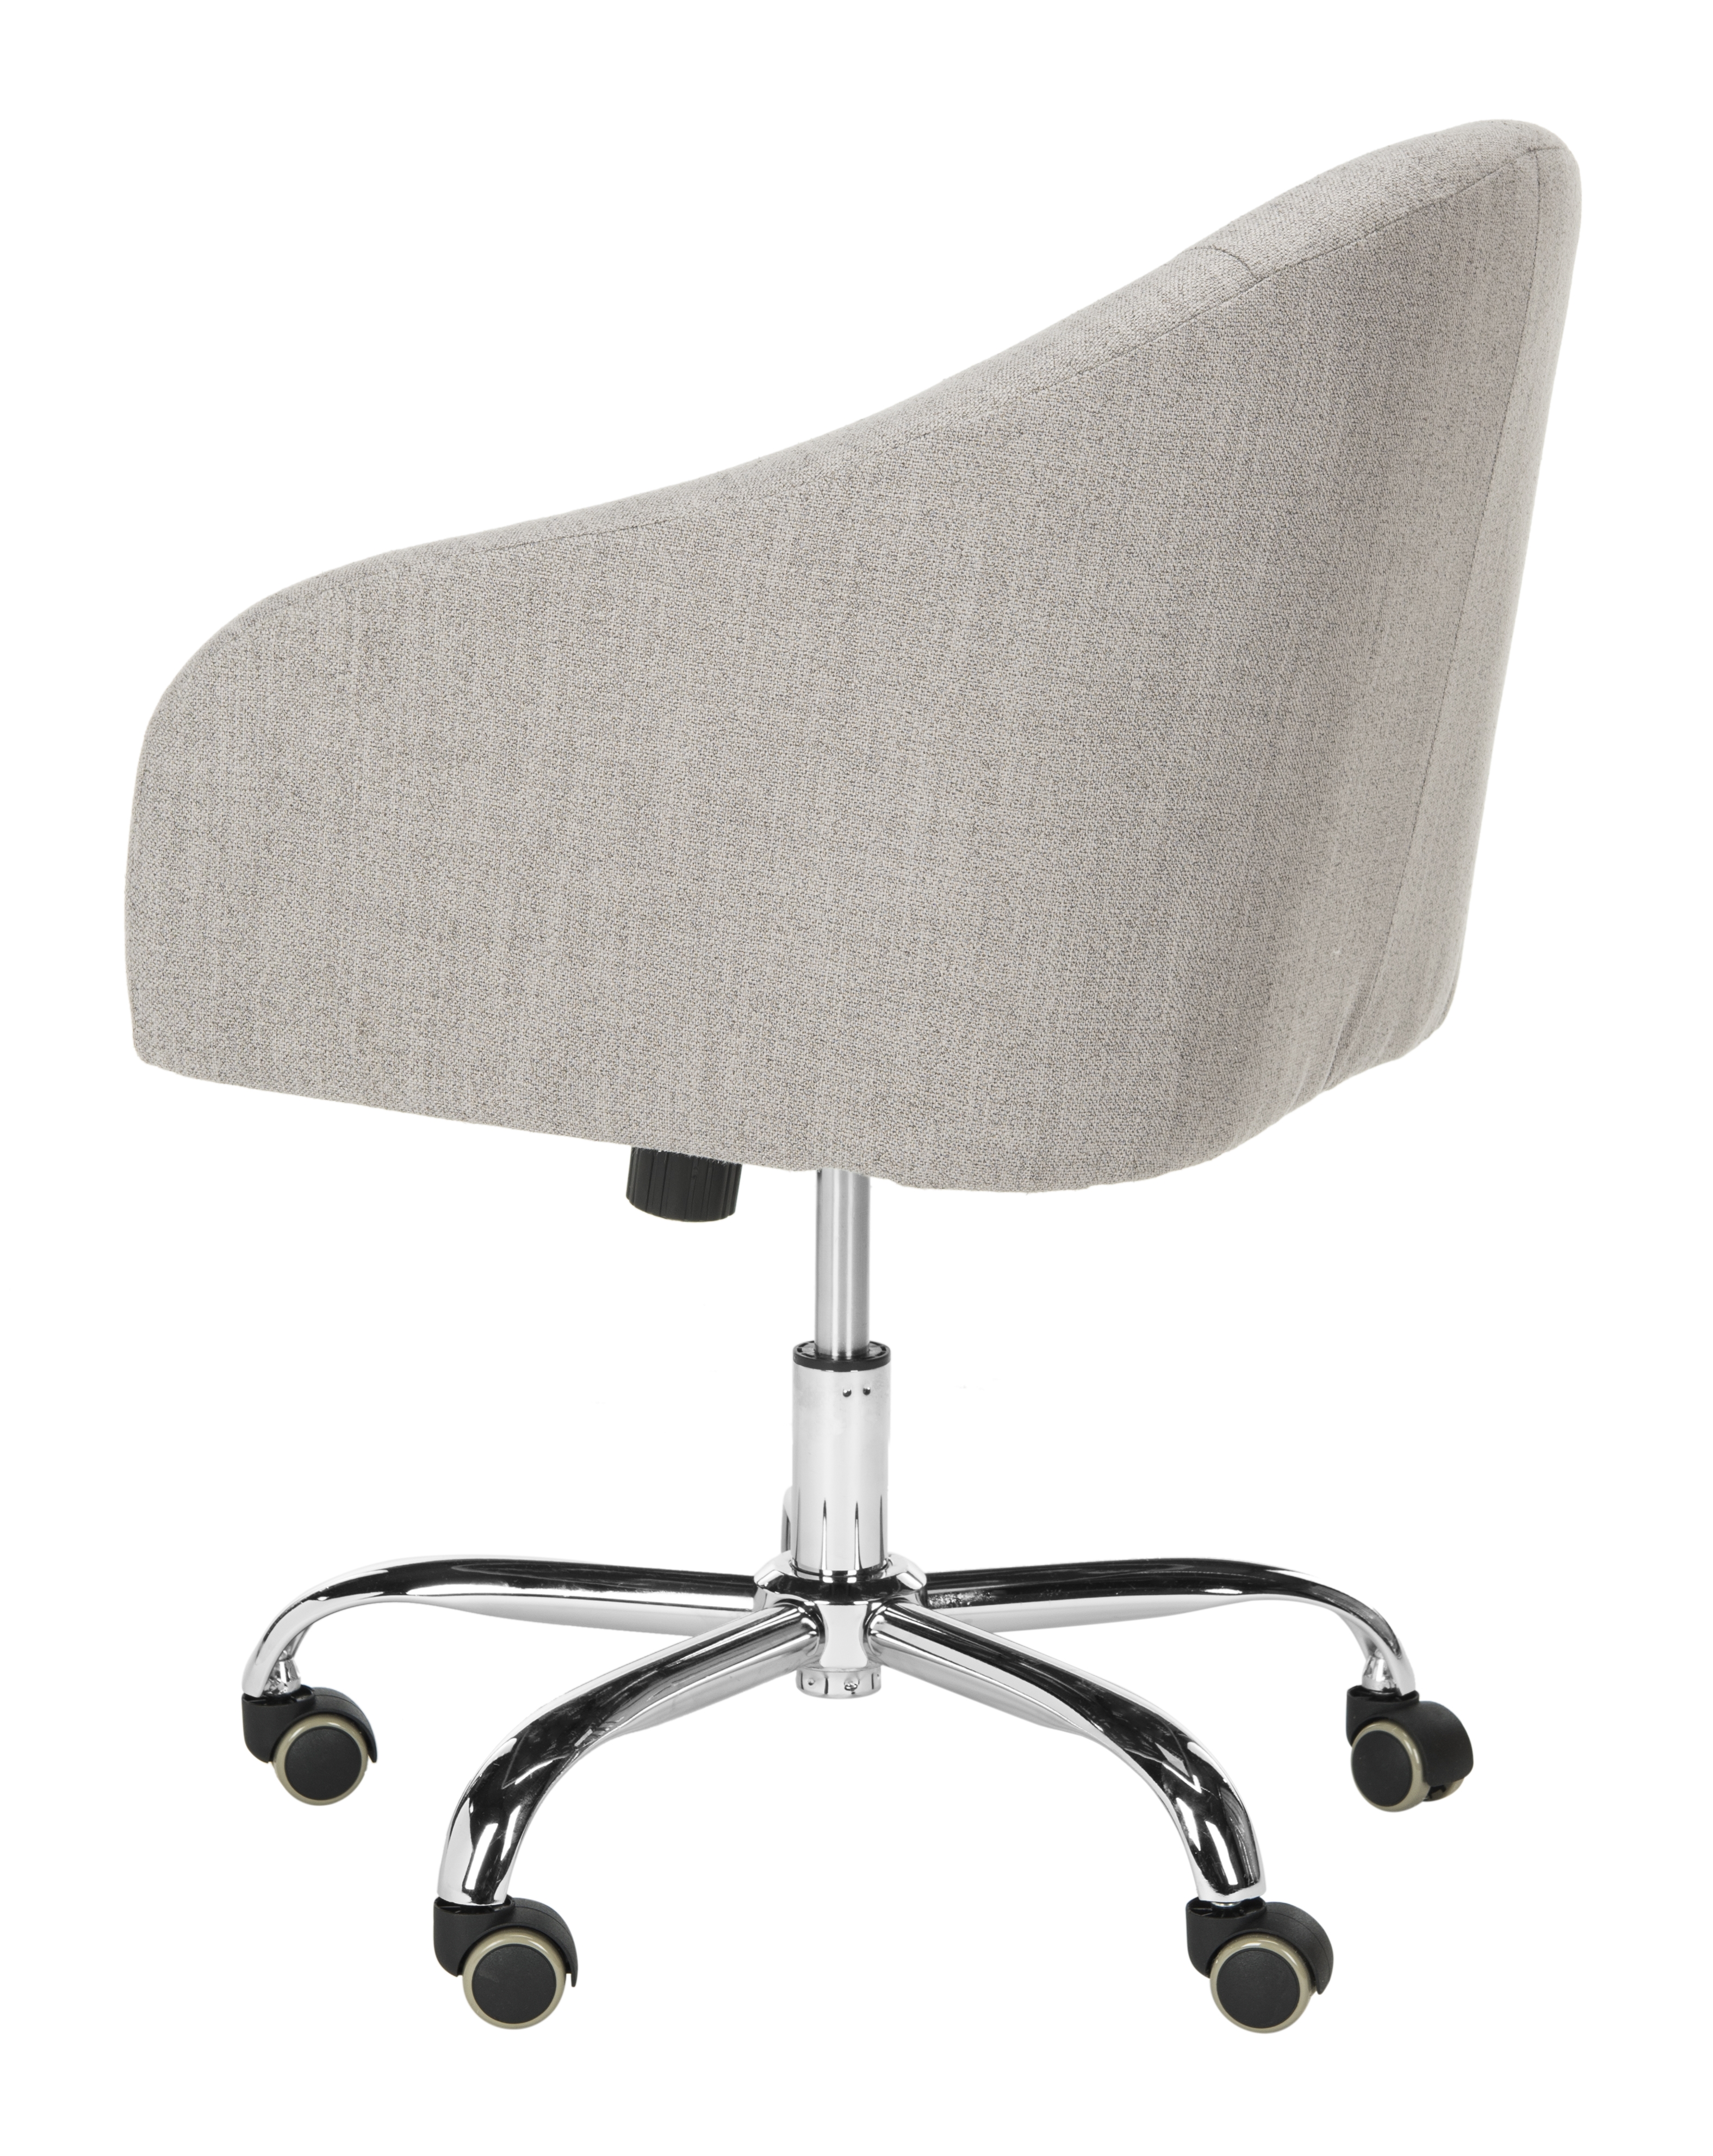 Amy Tufted Linen Chrome Leg Swivel Office Chair - Grey/Chrome - Arlo Home - Image 4